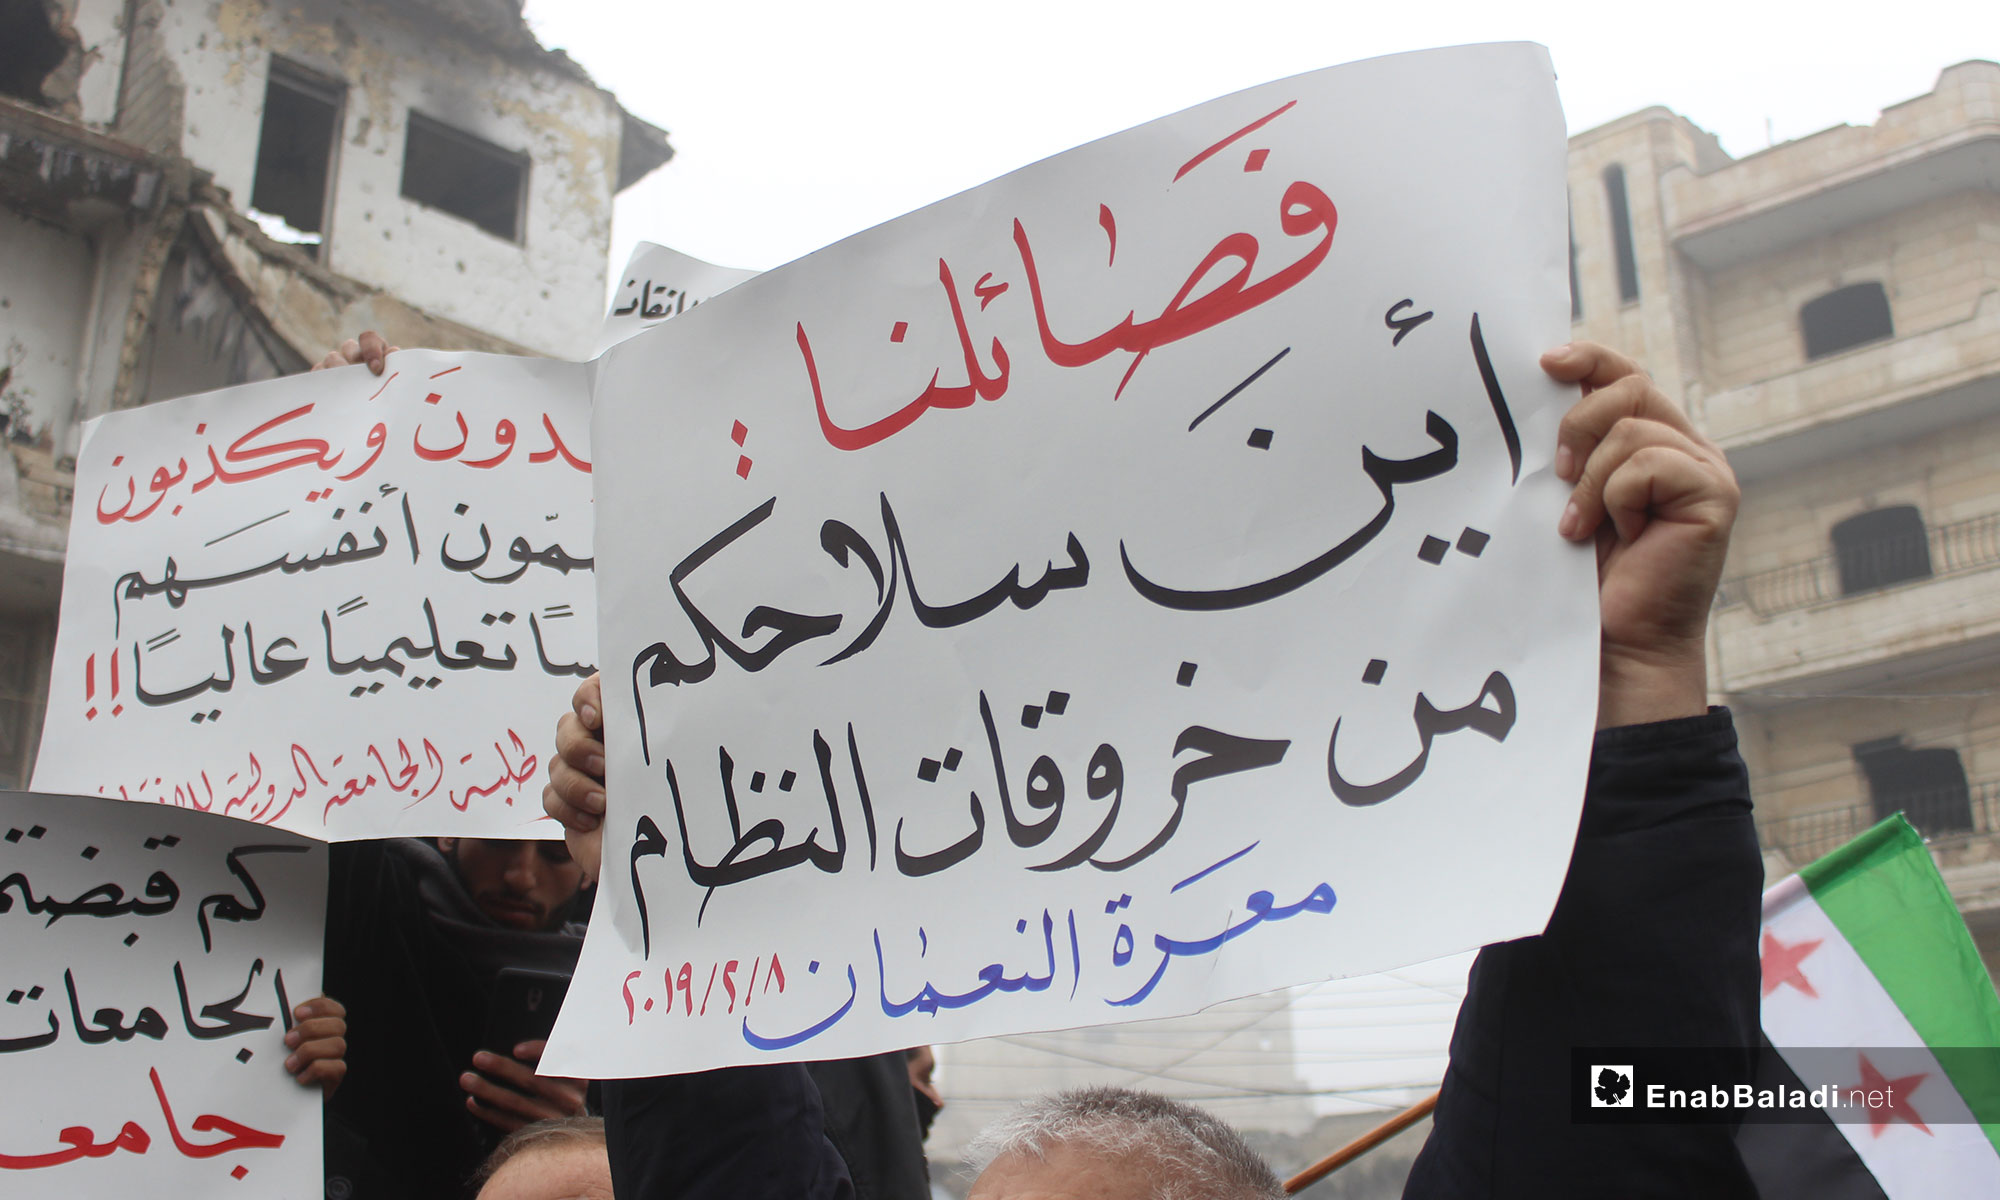 A demonstration in the city of Maarrat al-Nu